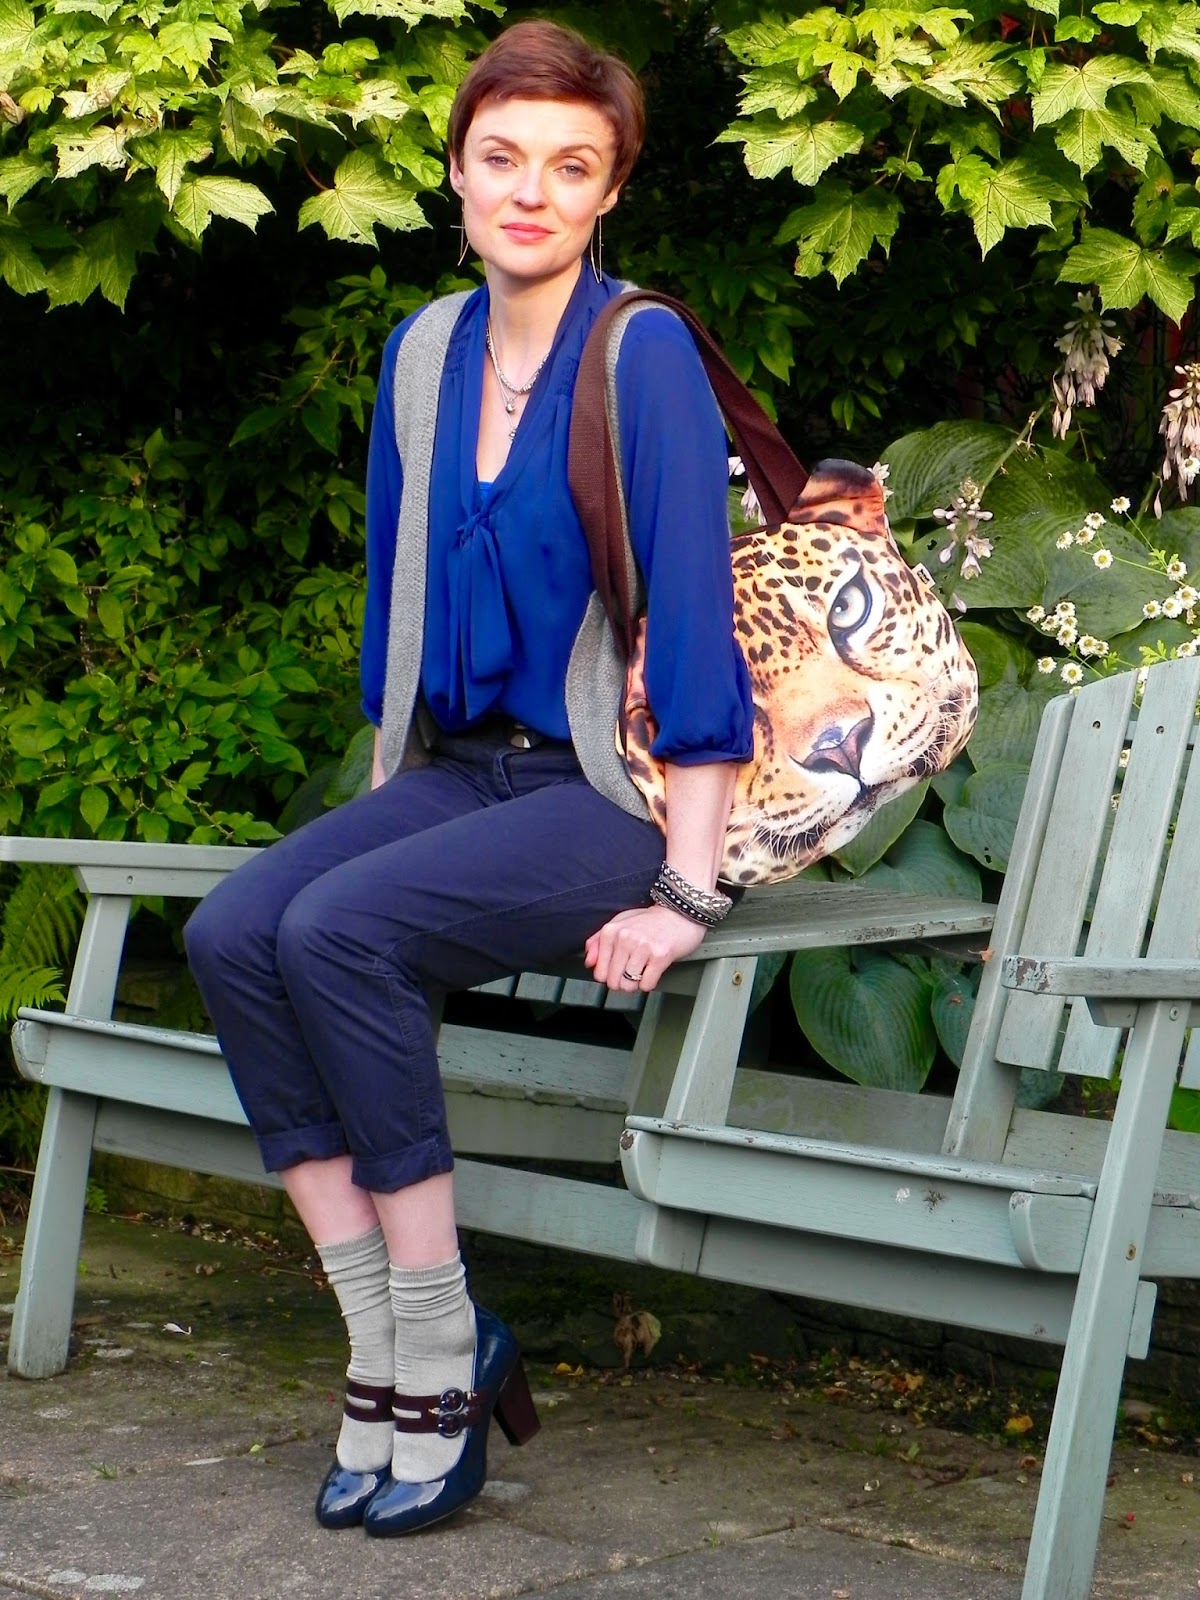 Easy ways to wear Leopard Print | Fake Fabulous